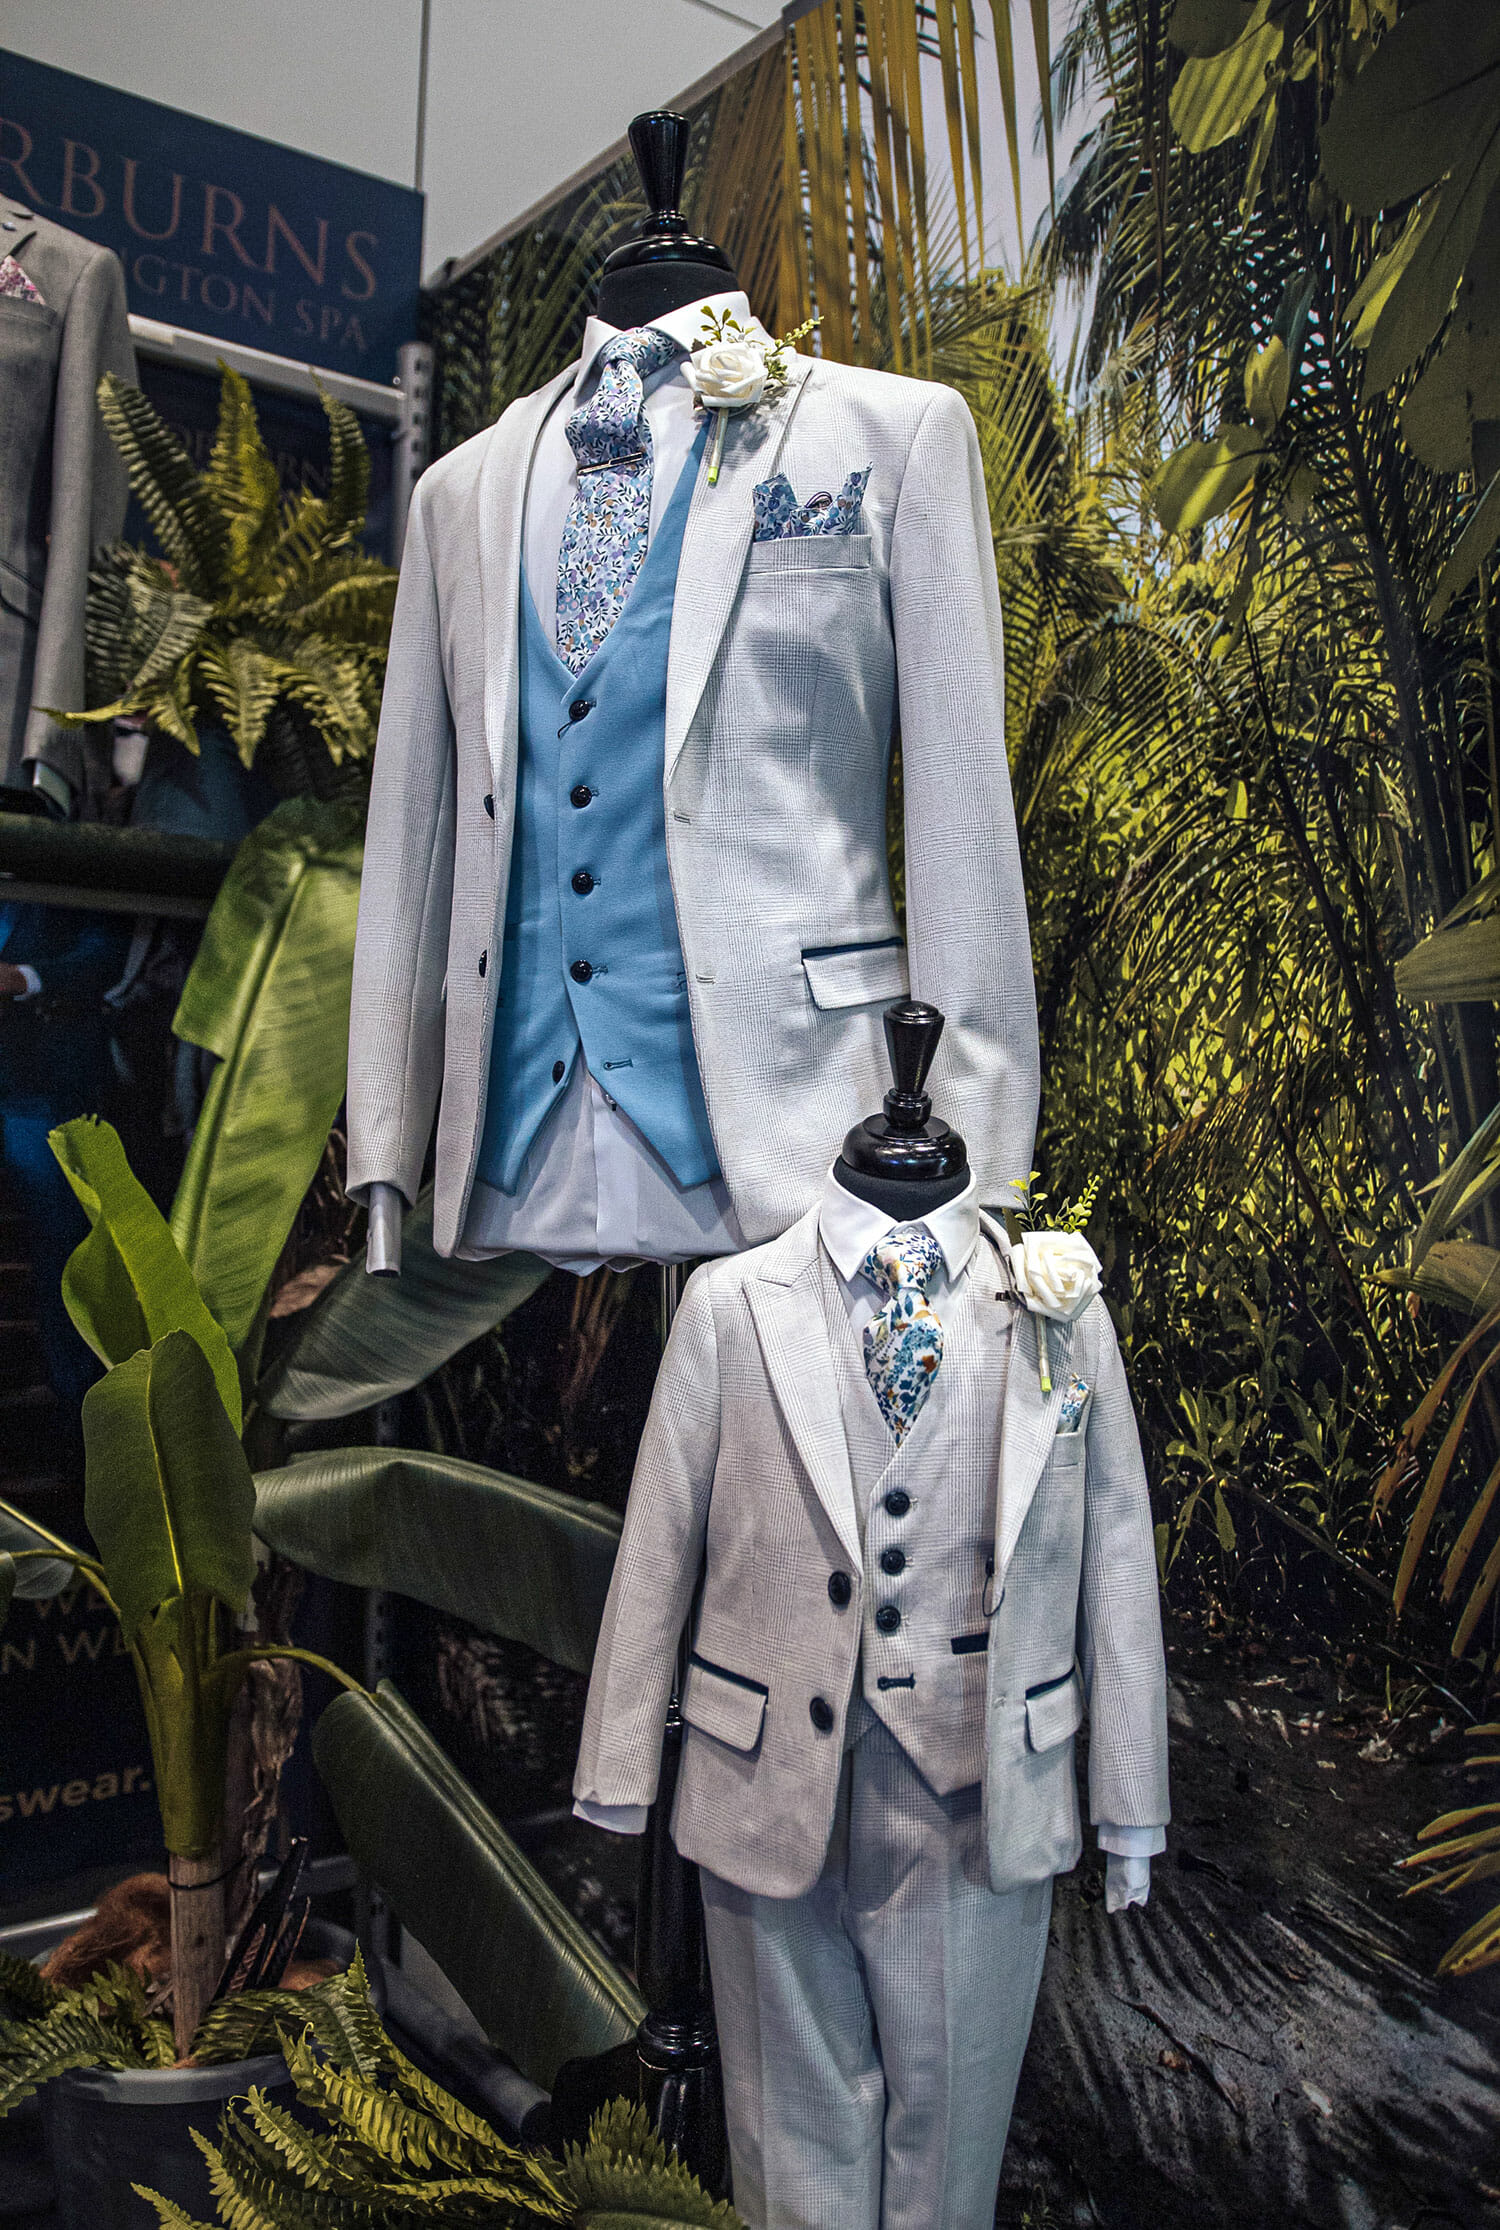 Thorburns Leamington Spa Wedding suits for boys